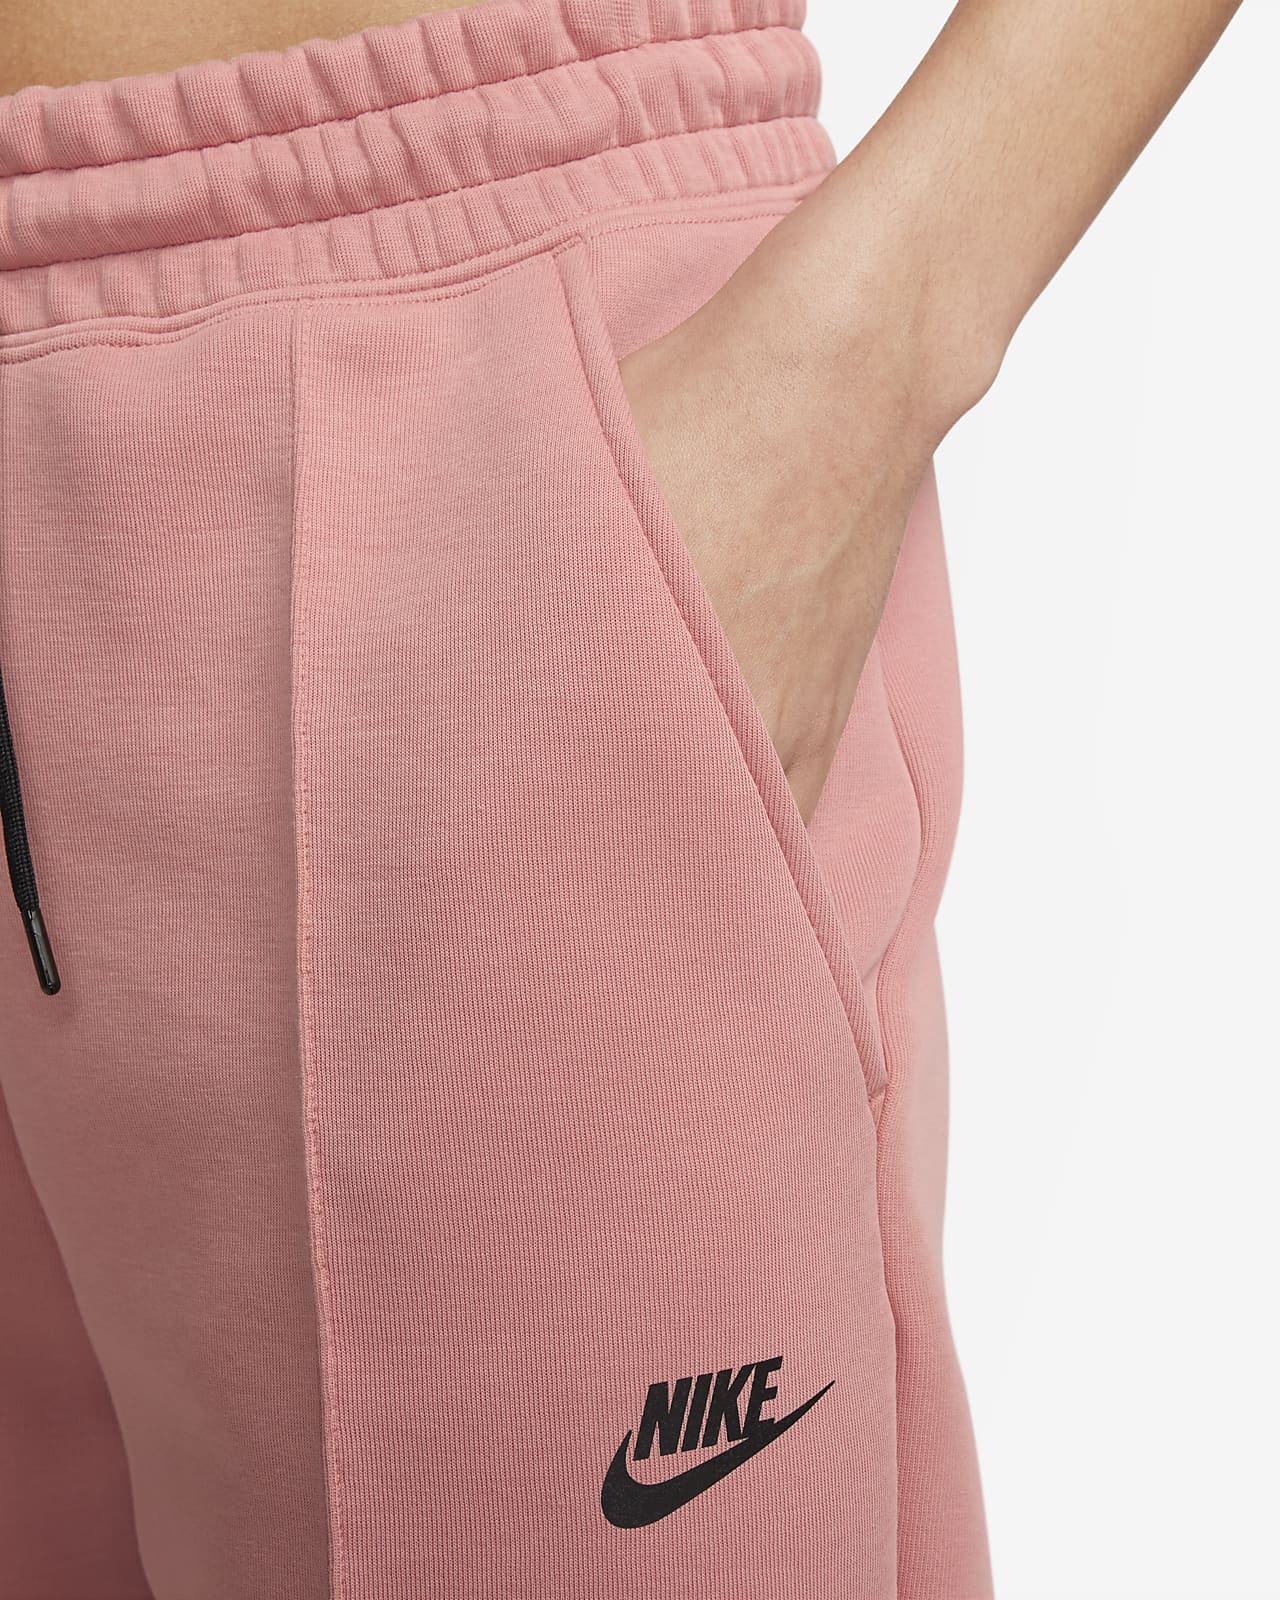 guld I stor skala infrastruktur Nike Sportswear Tech Fleece-joggers med mellemhøj talje til kvinder. Nike DK